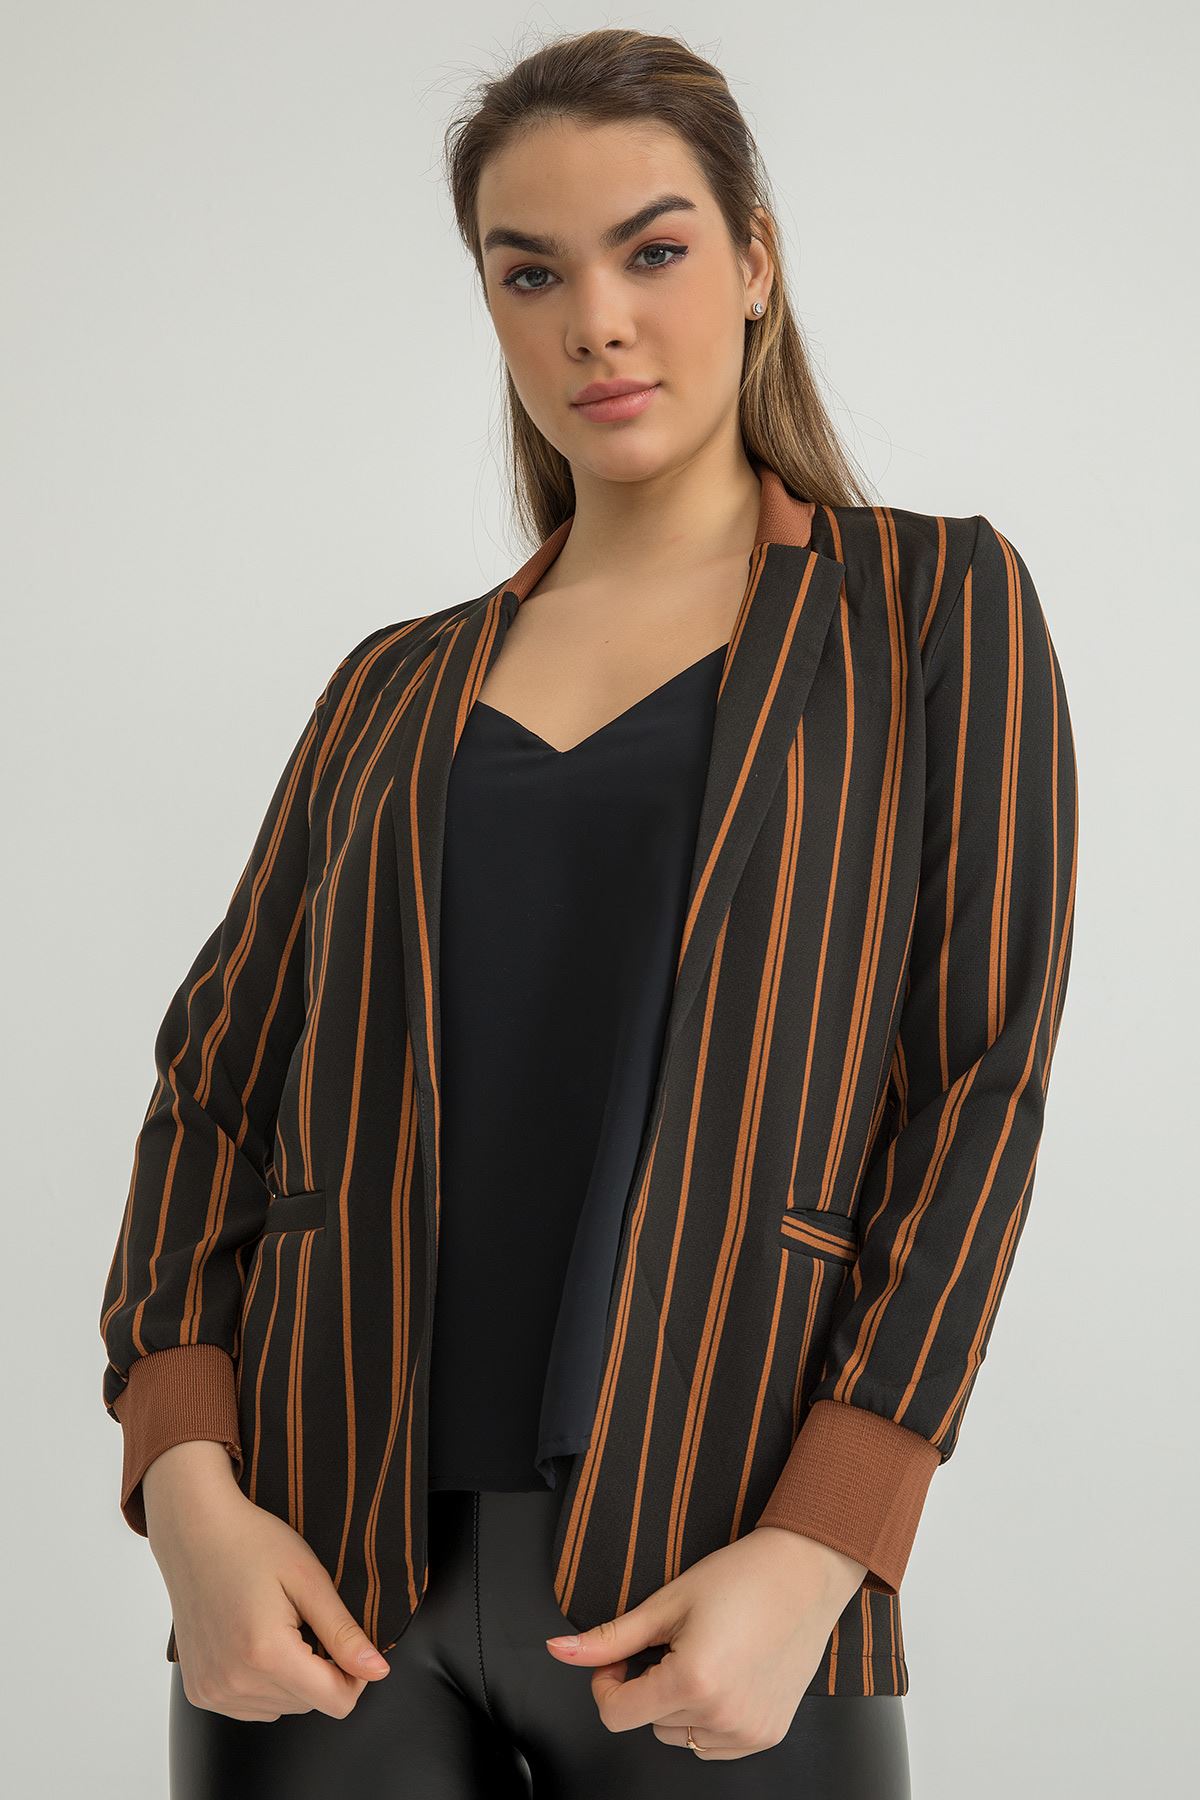 Atlas Fabric Long Sleeve Revere Collar Classical Striped Women Jacket - Light Brown